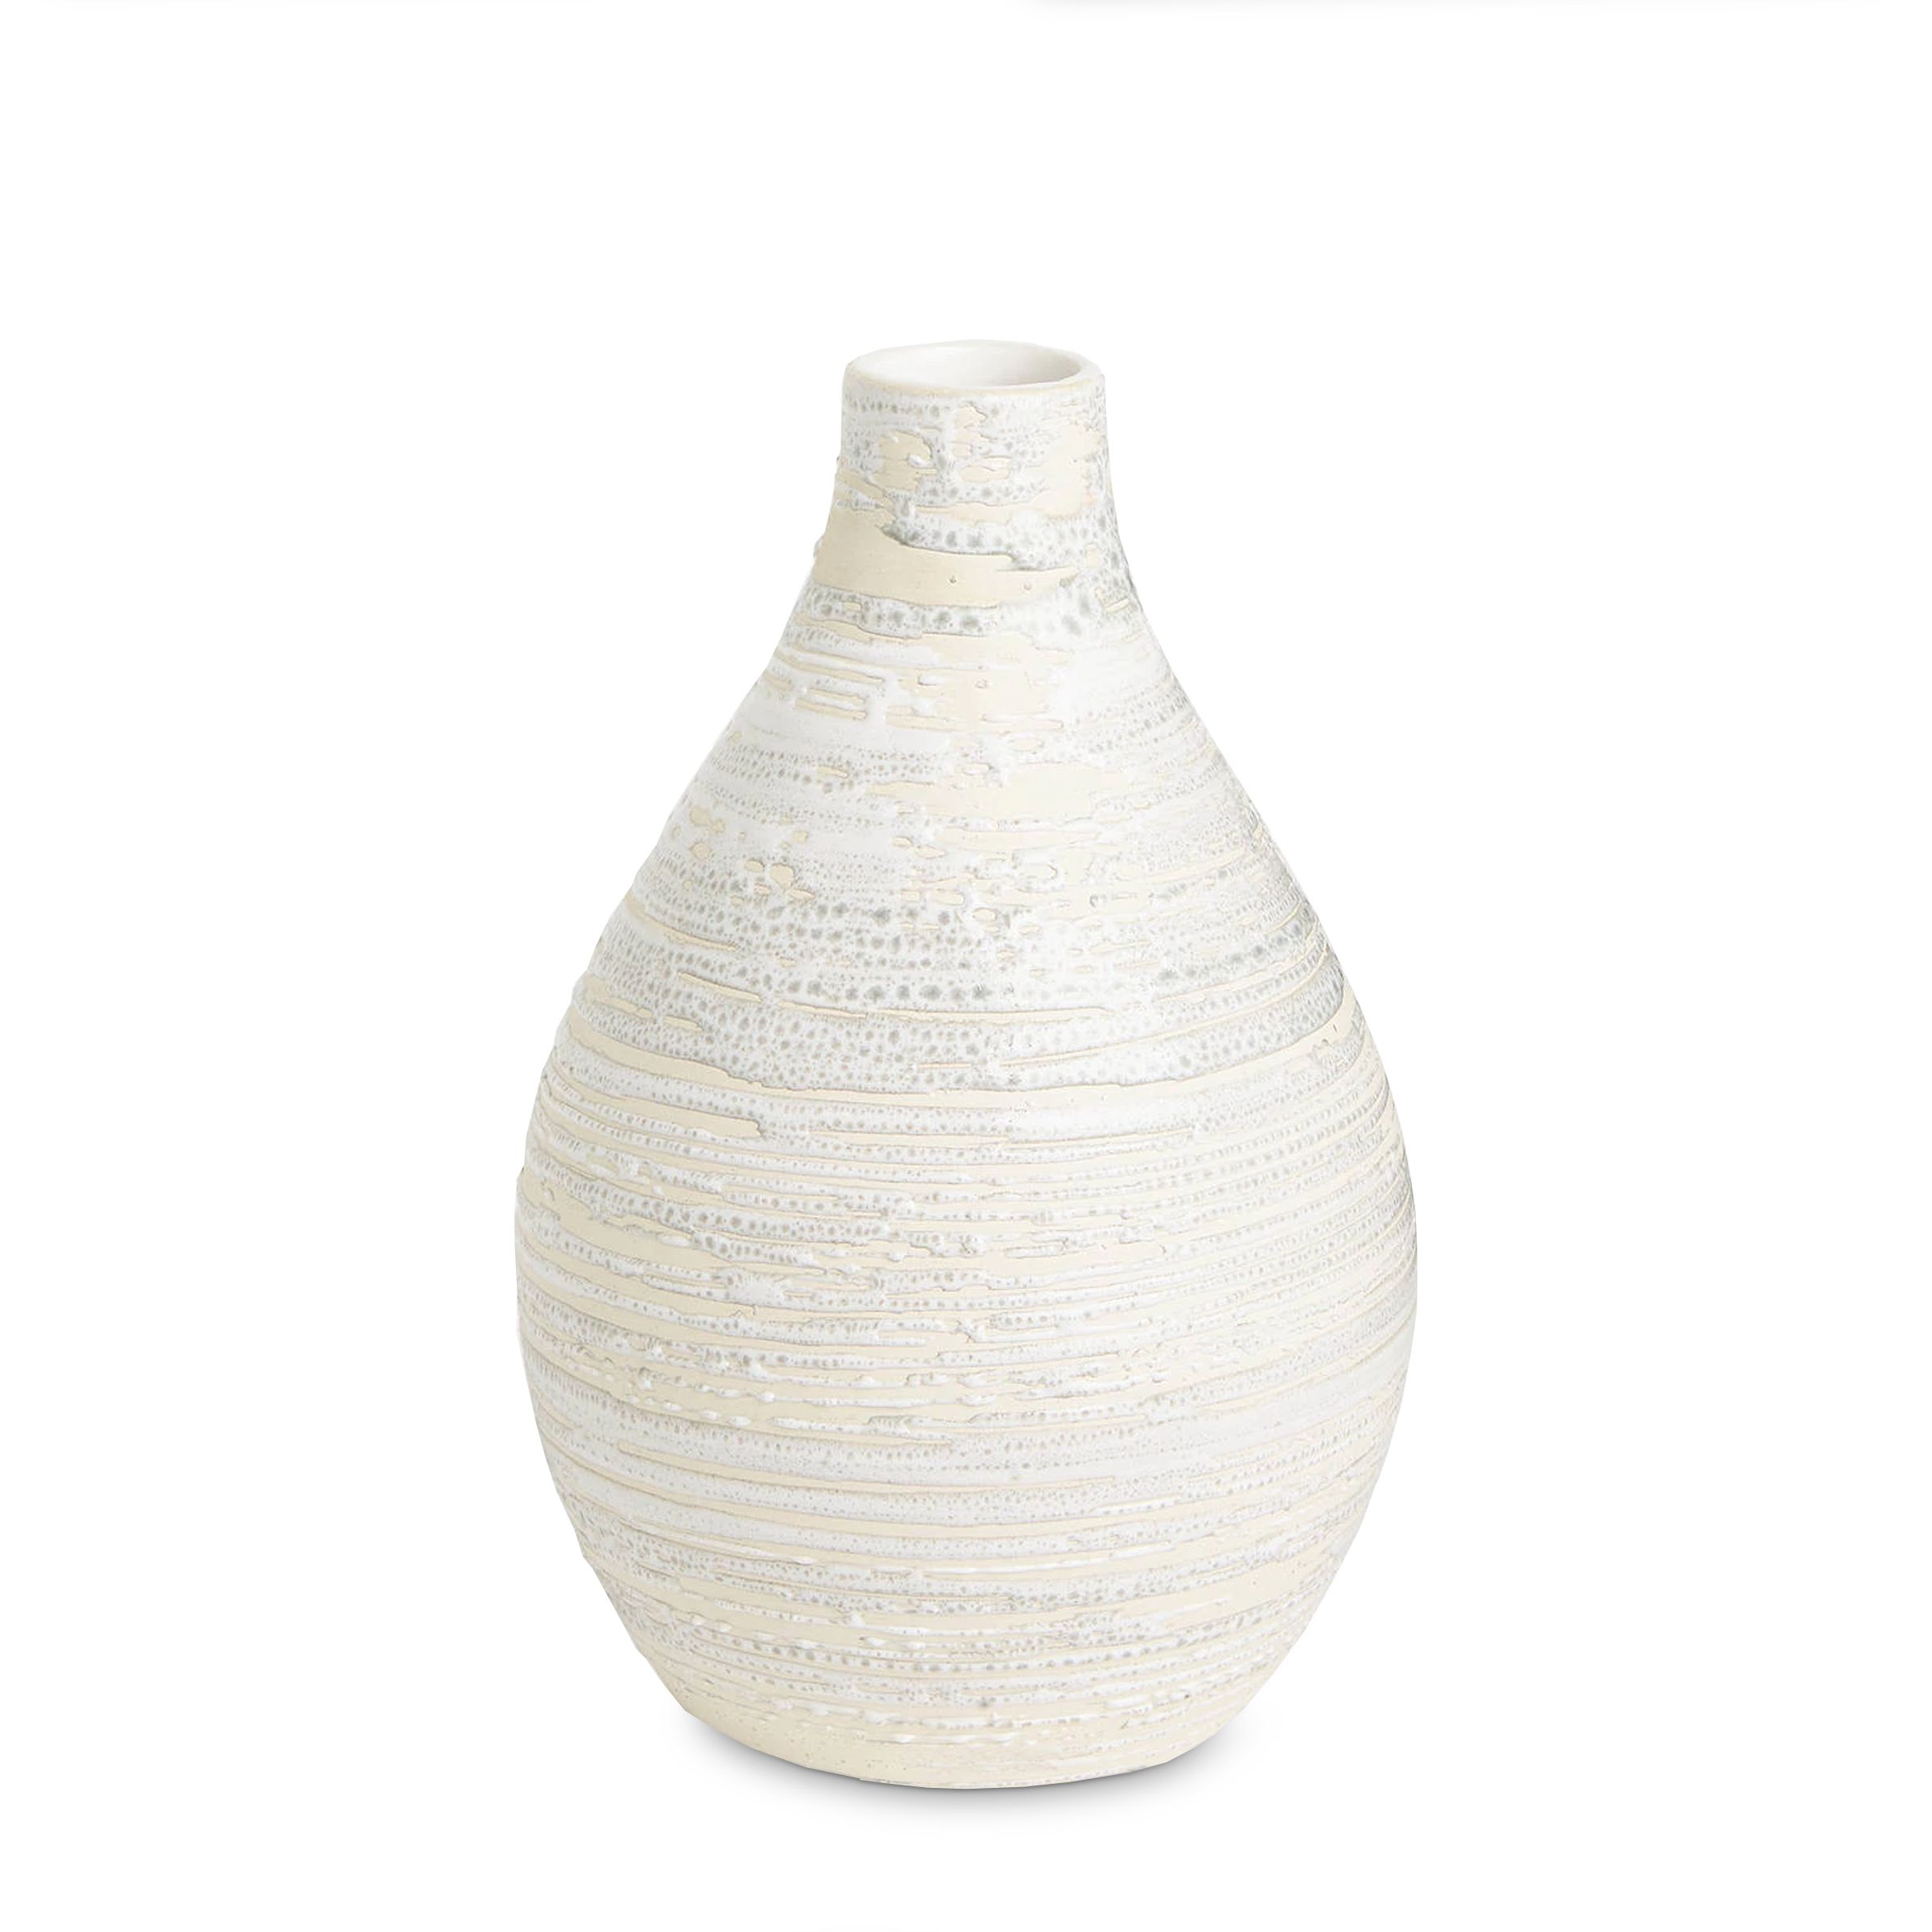 John Lewis & Partners Saturn Rings Reactive Glaze Vase, White, H22cm